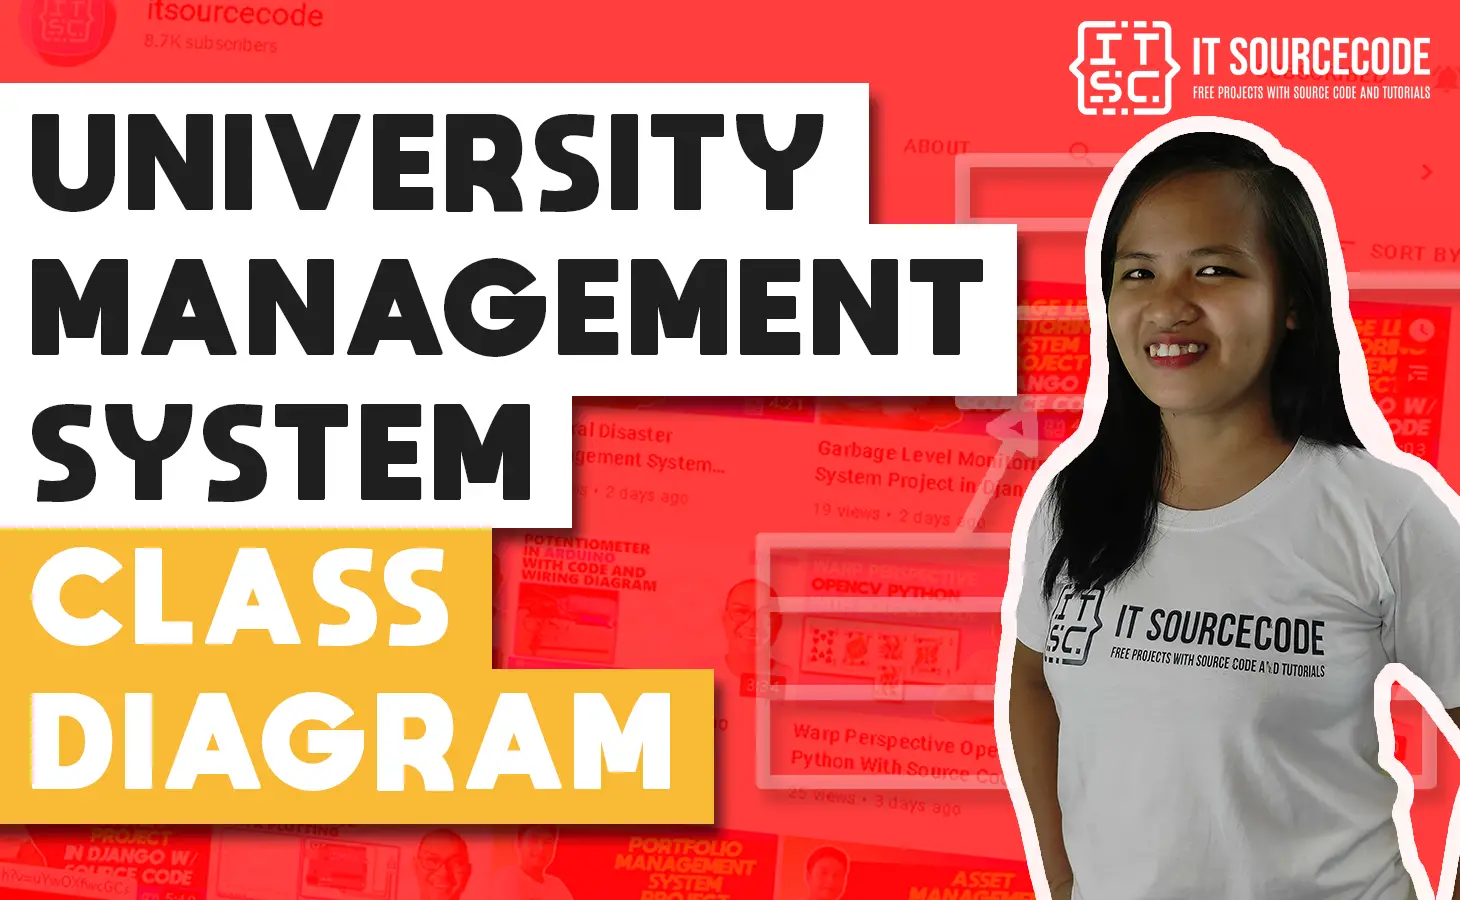 Class Diagram of University Management System